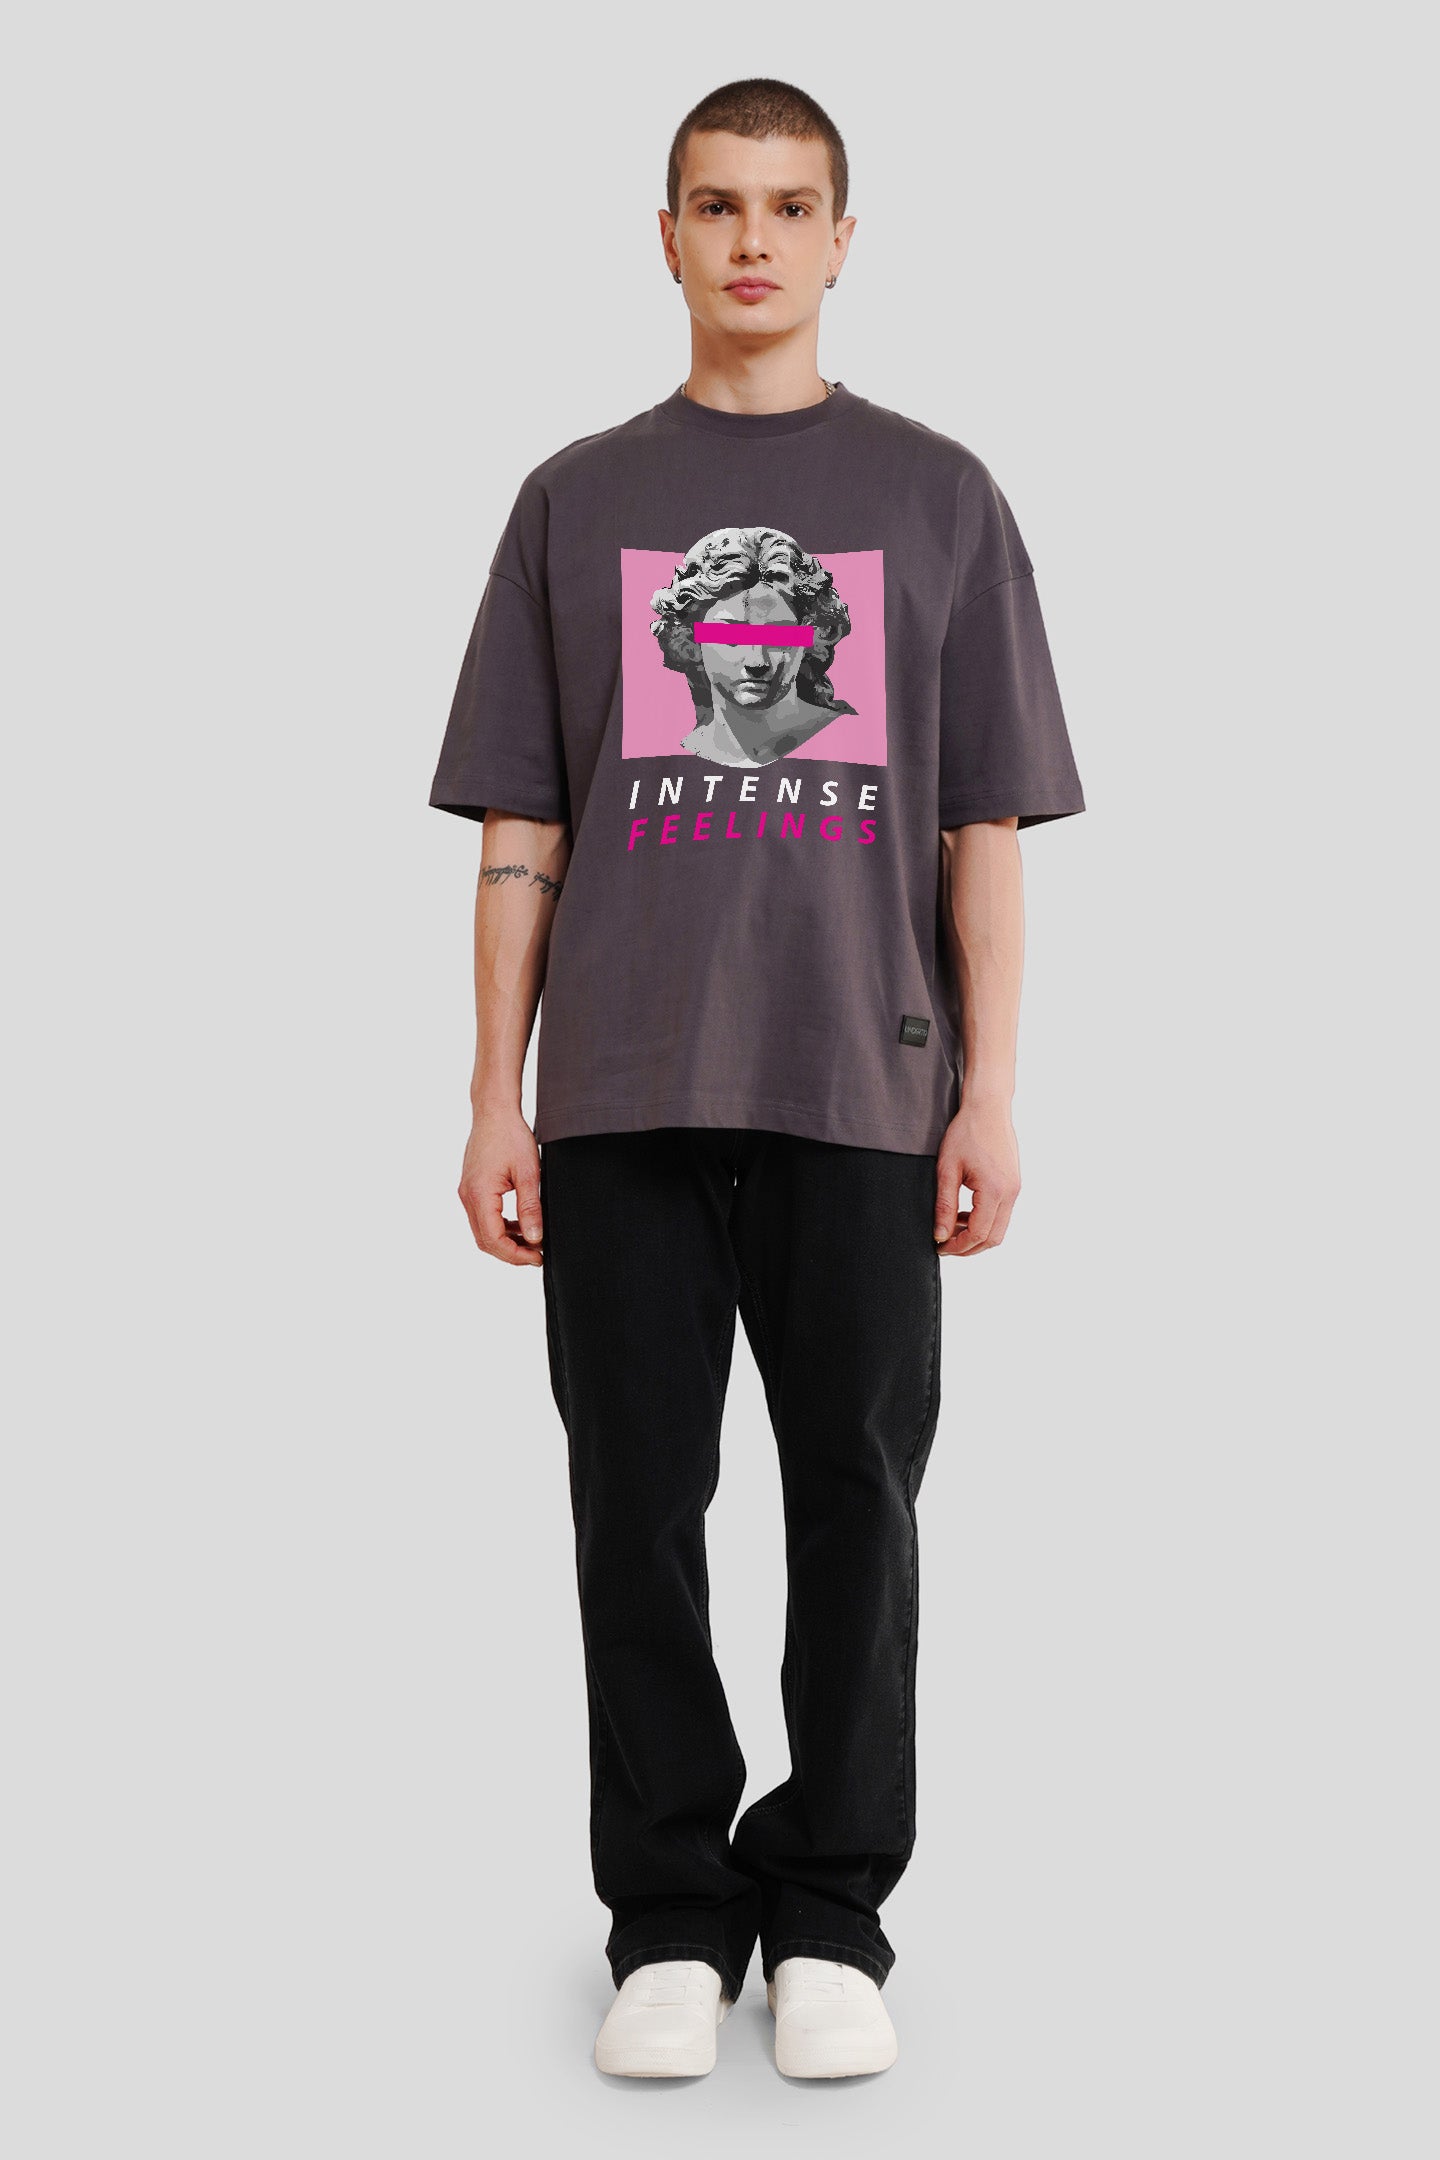 Intense Feelings Dark Grey Printed T Shirt Men Baggy Fit With Front Design Pic 3